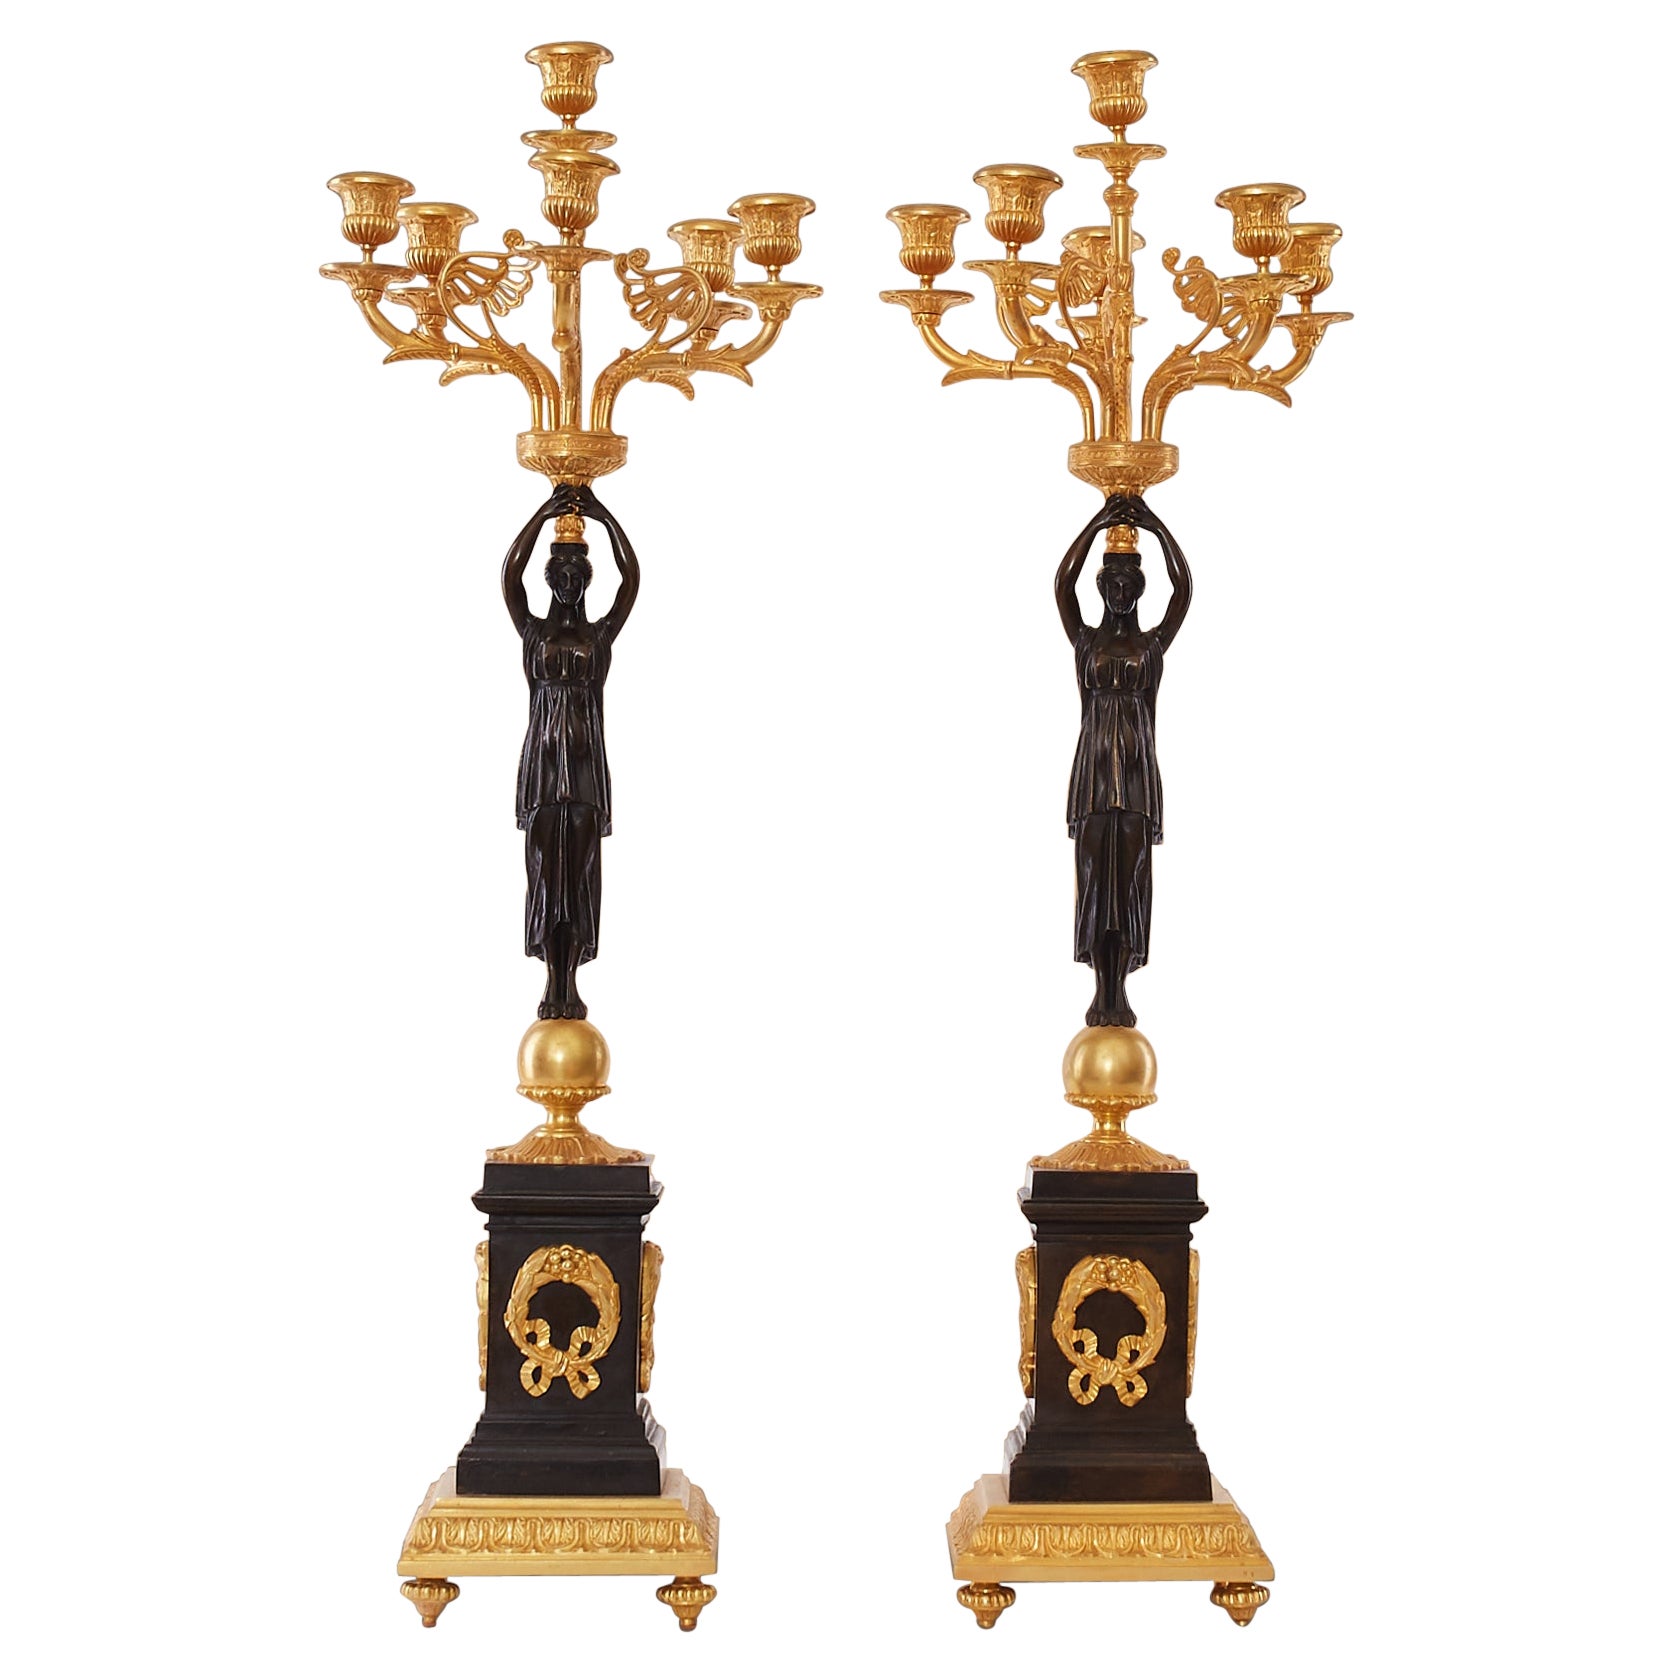 Pair of Elegant Antique Gilt Bronze Table Candelabras